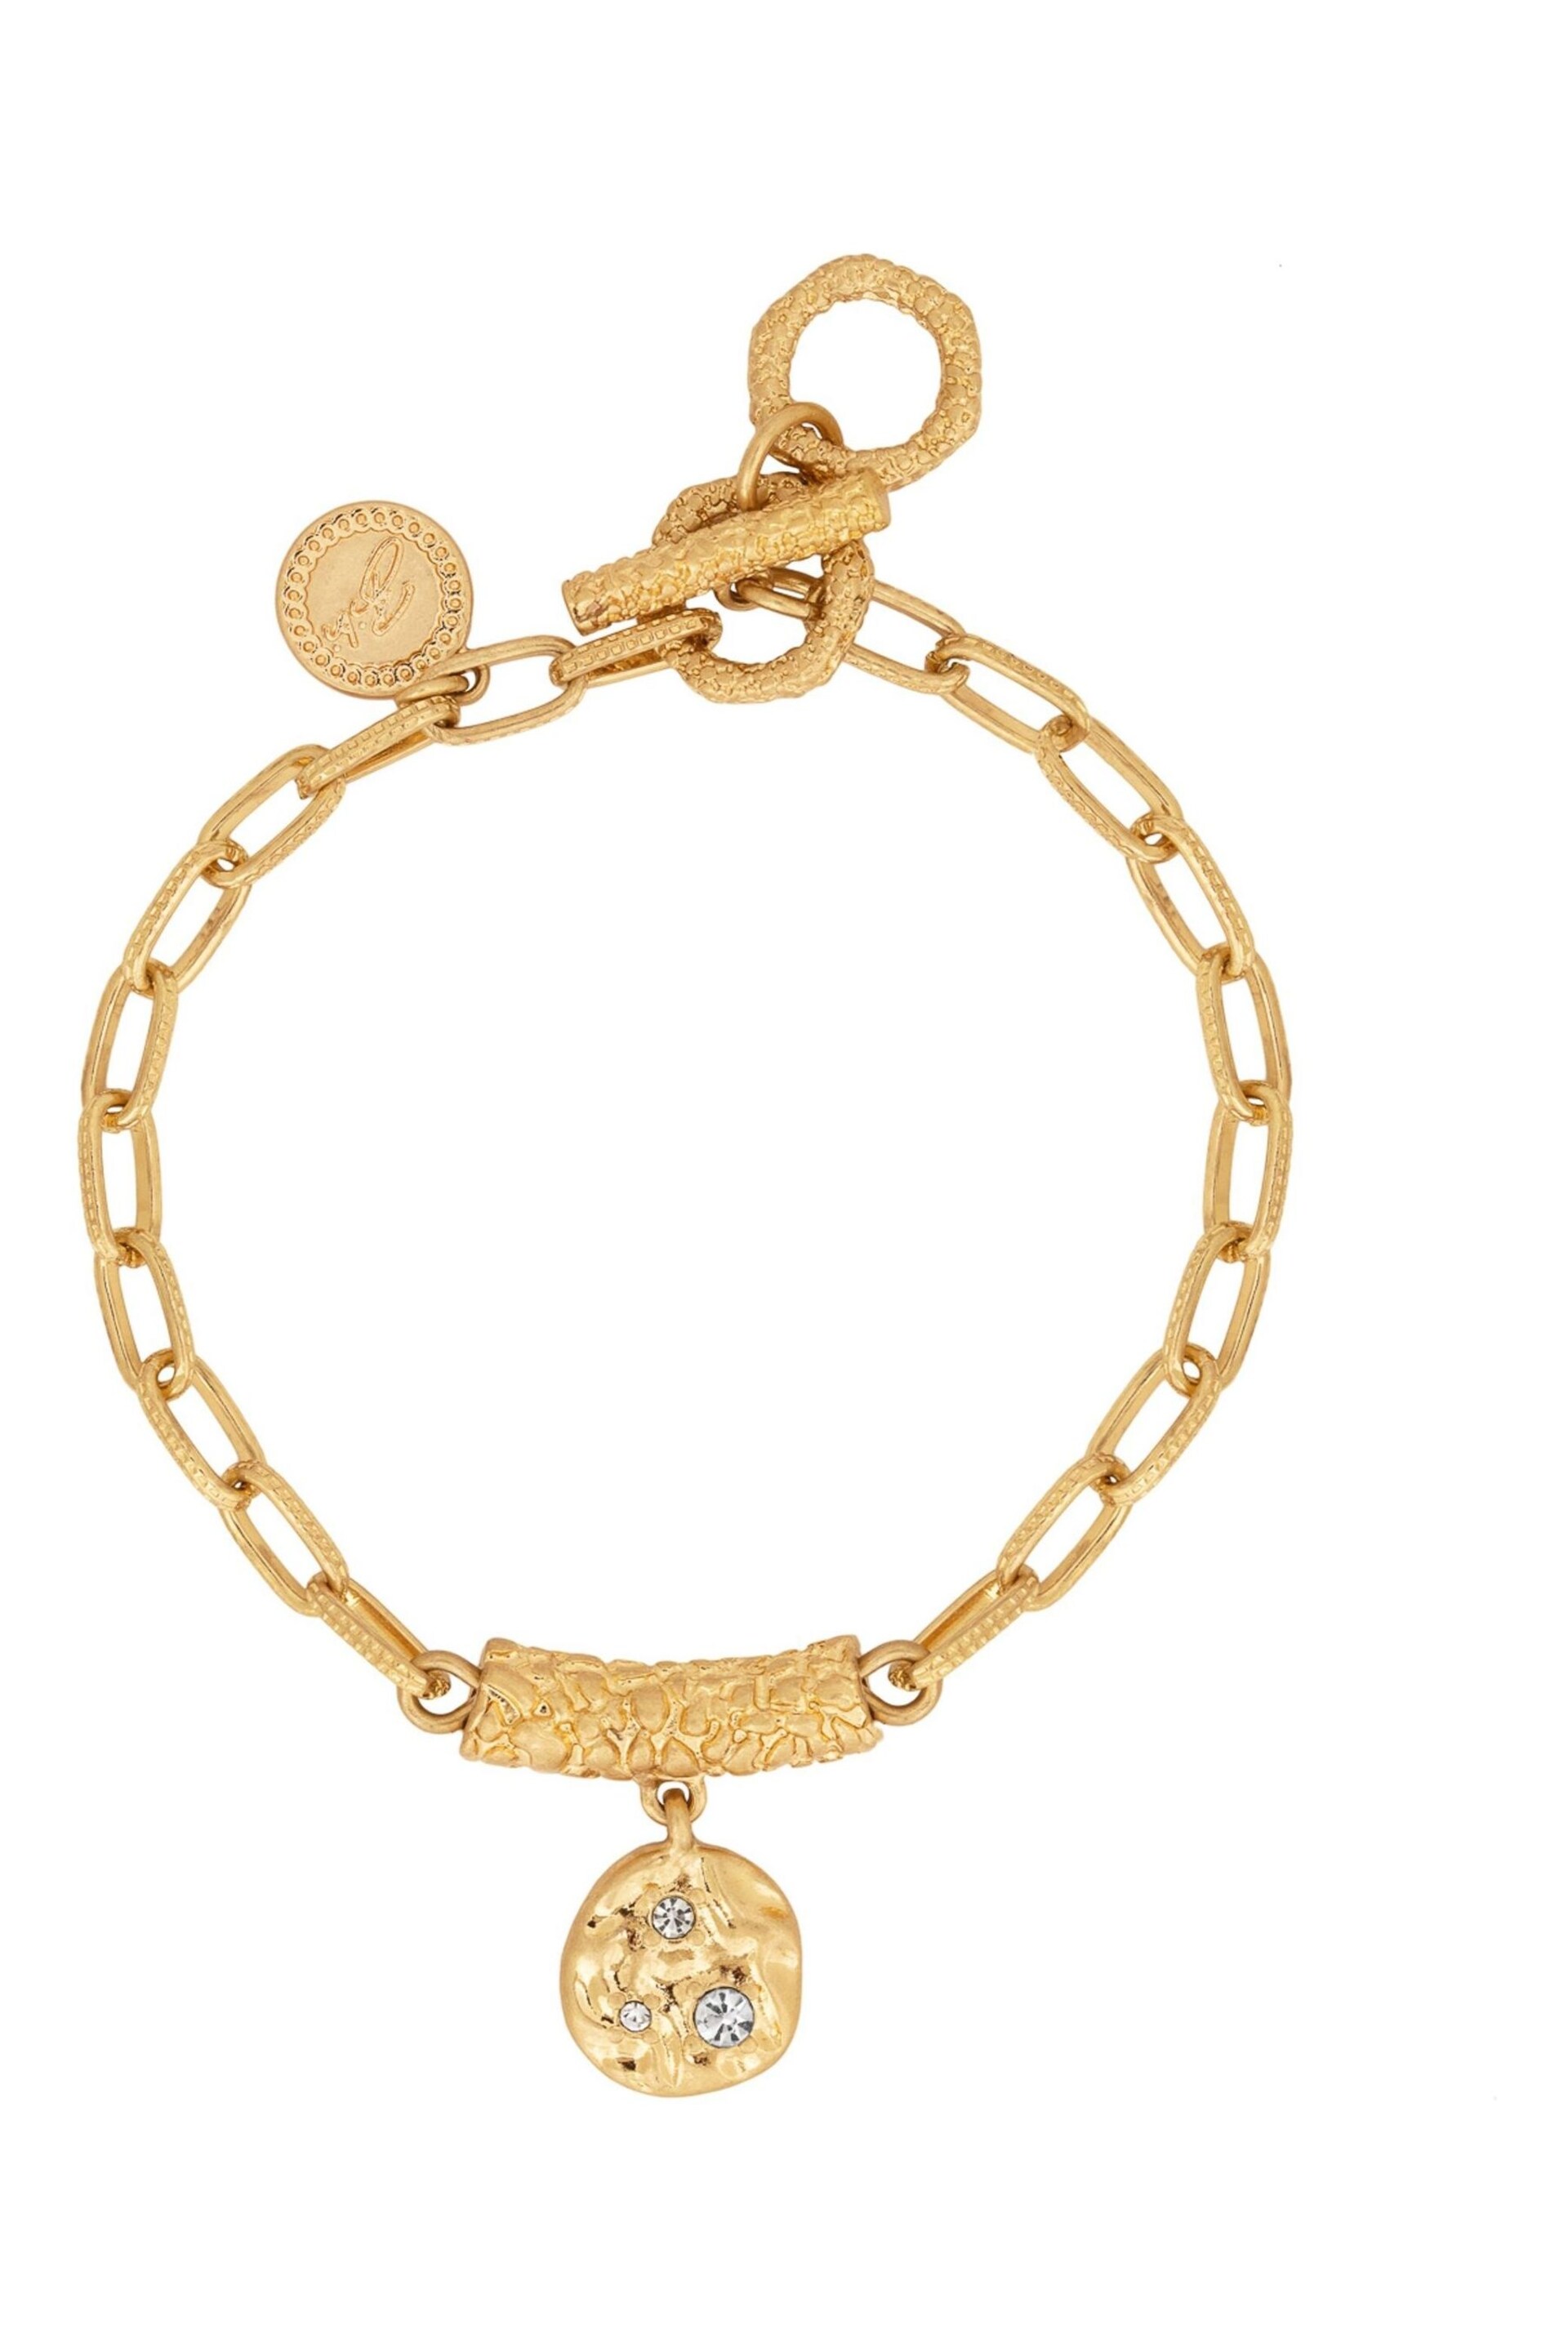 Bibi Bijoux Gold Tone 'Radiance' Bracelet and Earrings Set - Image 2 of 4